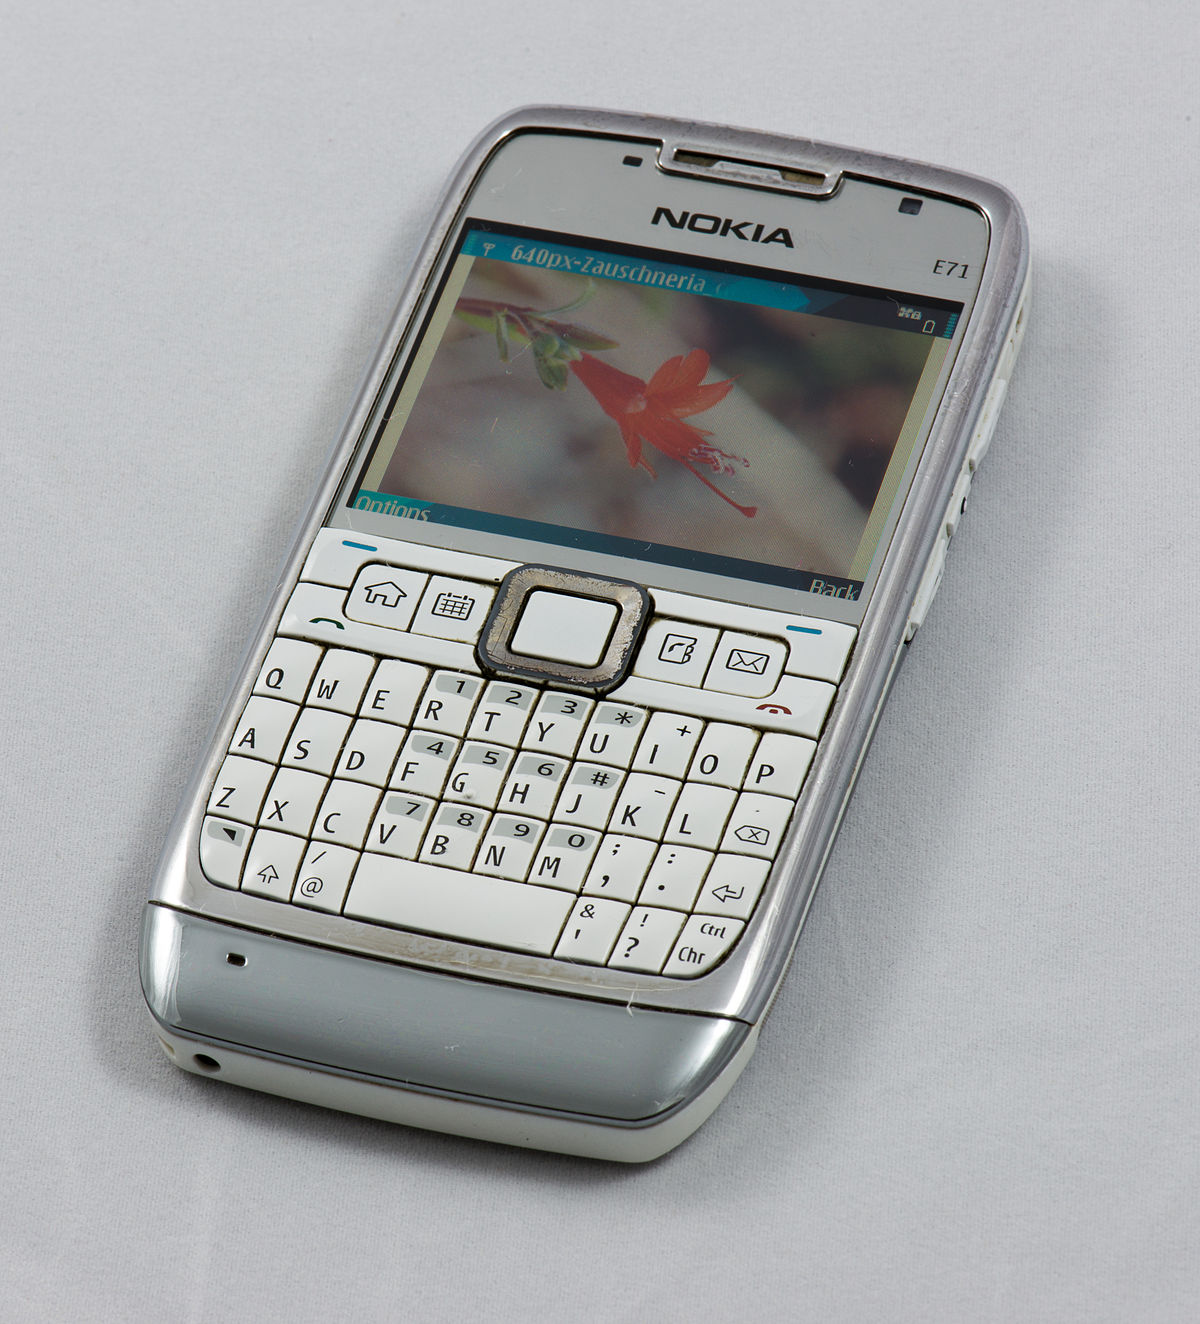 App S60spoton For Nokia E71